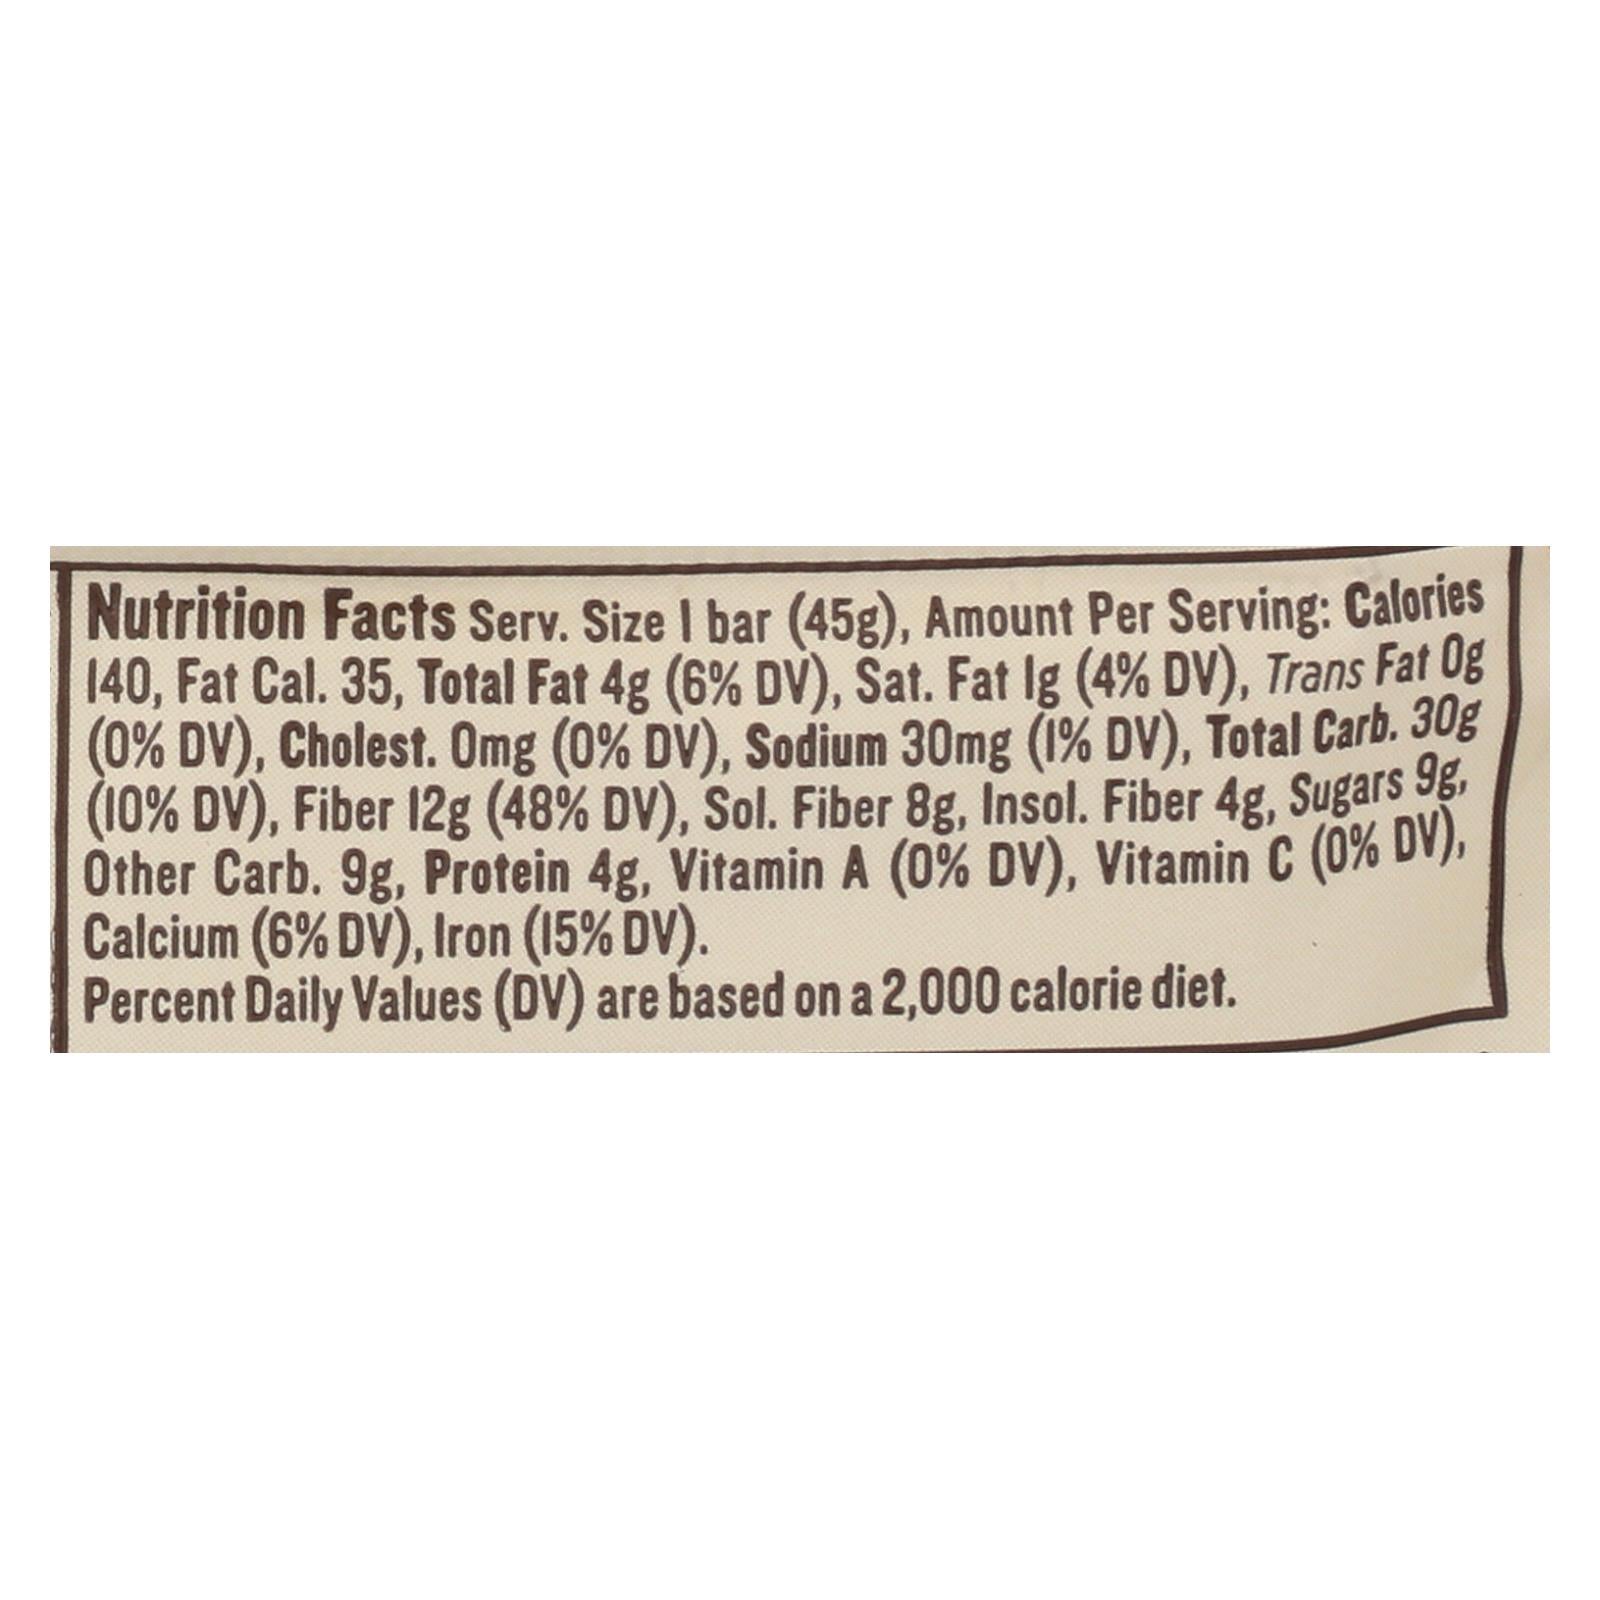 NuGo Nutrition Bar - Fiber dLish - Chocolate Brownie - 1.6 oz Bars - Case of 16